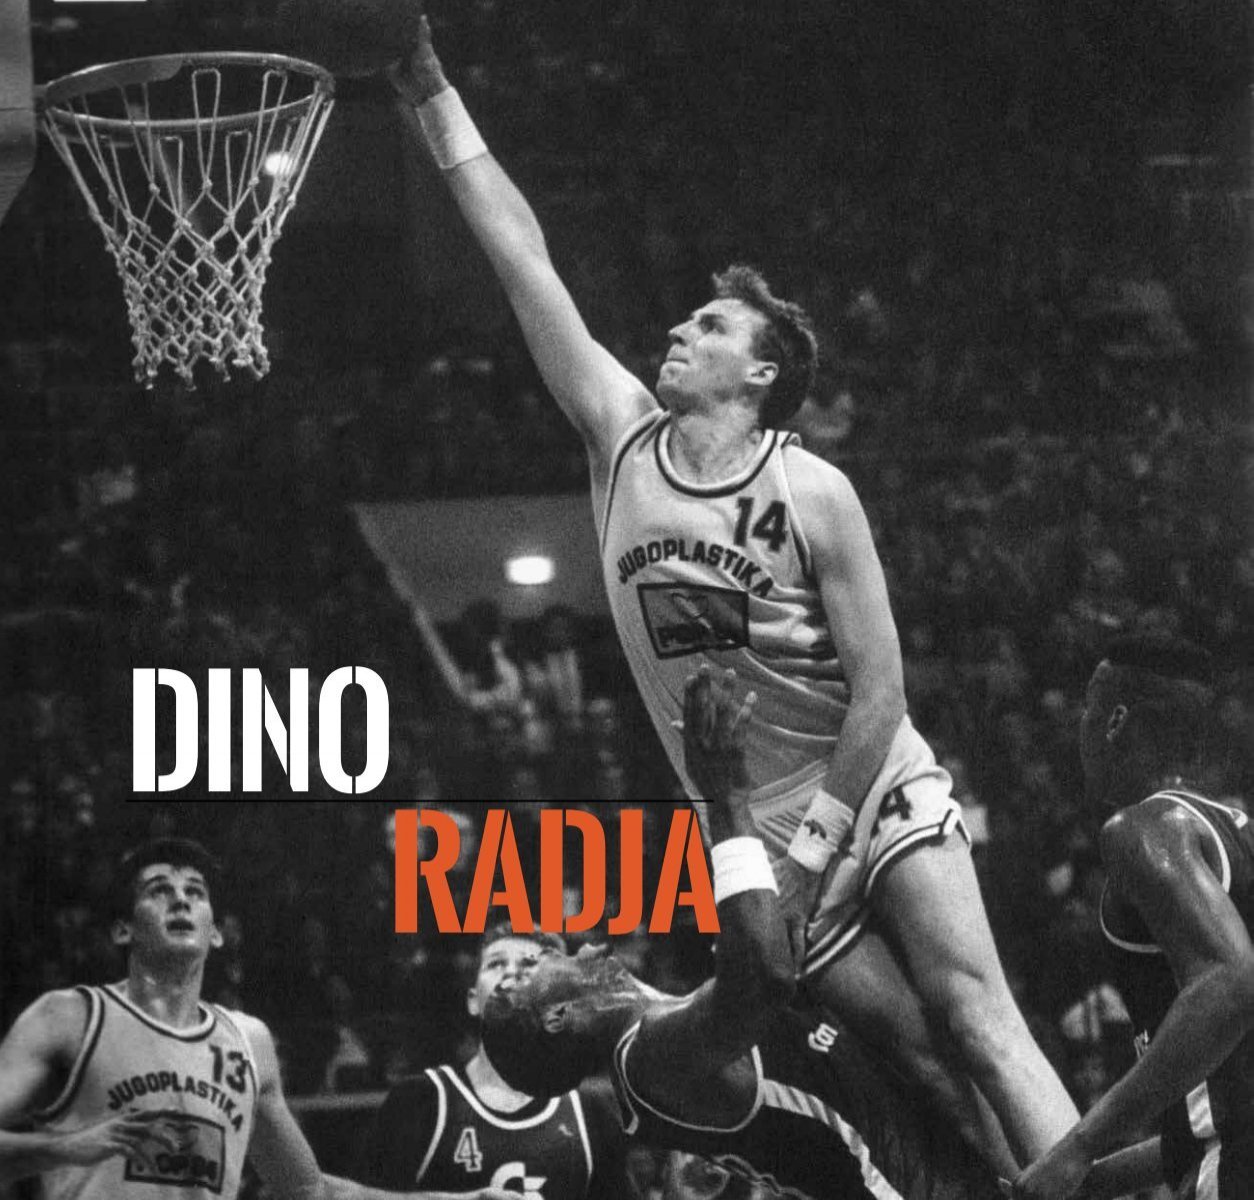 Tagged with Dino Radja